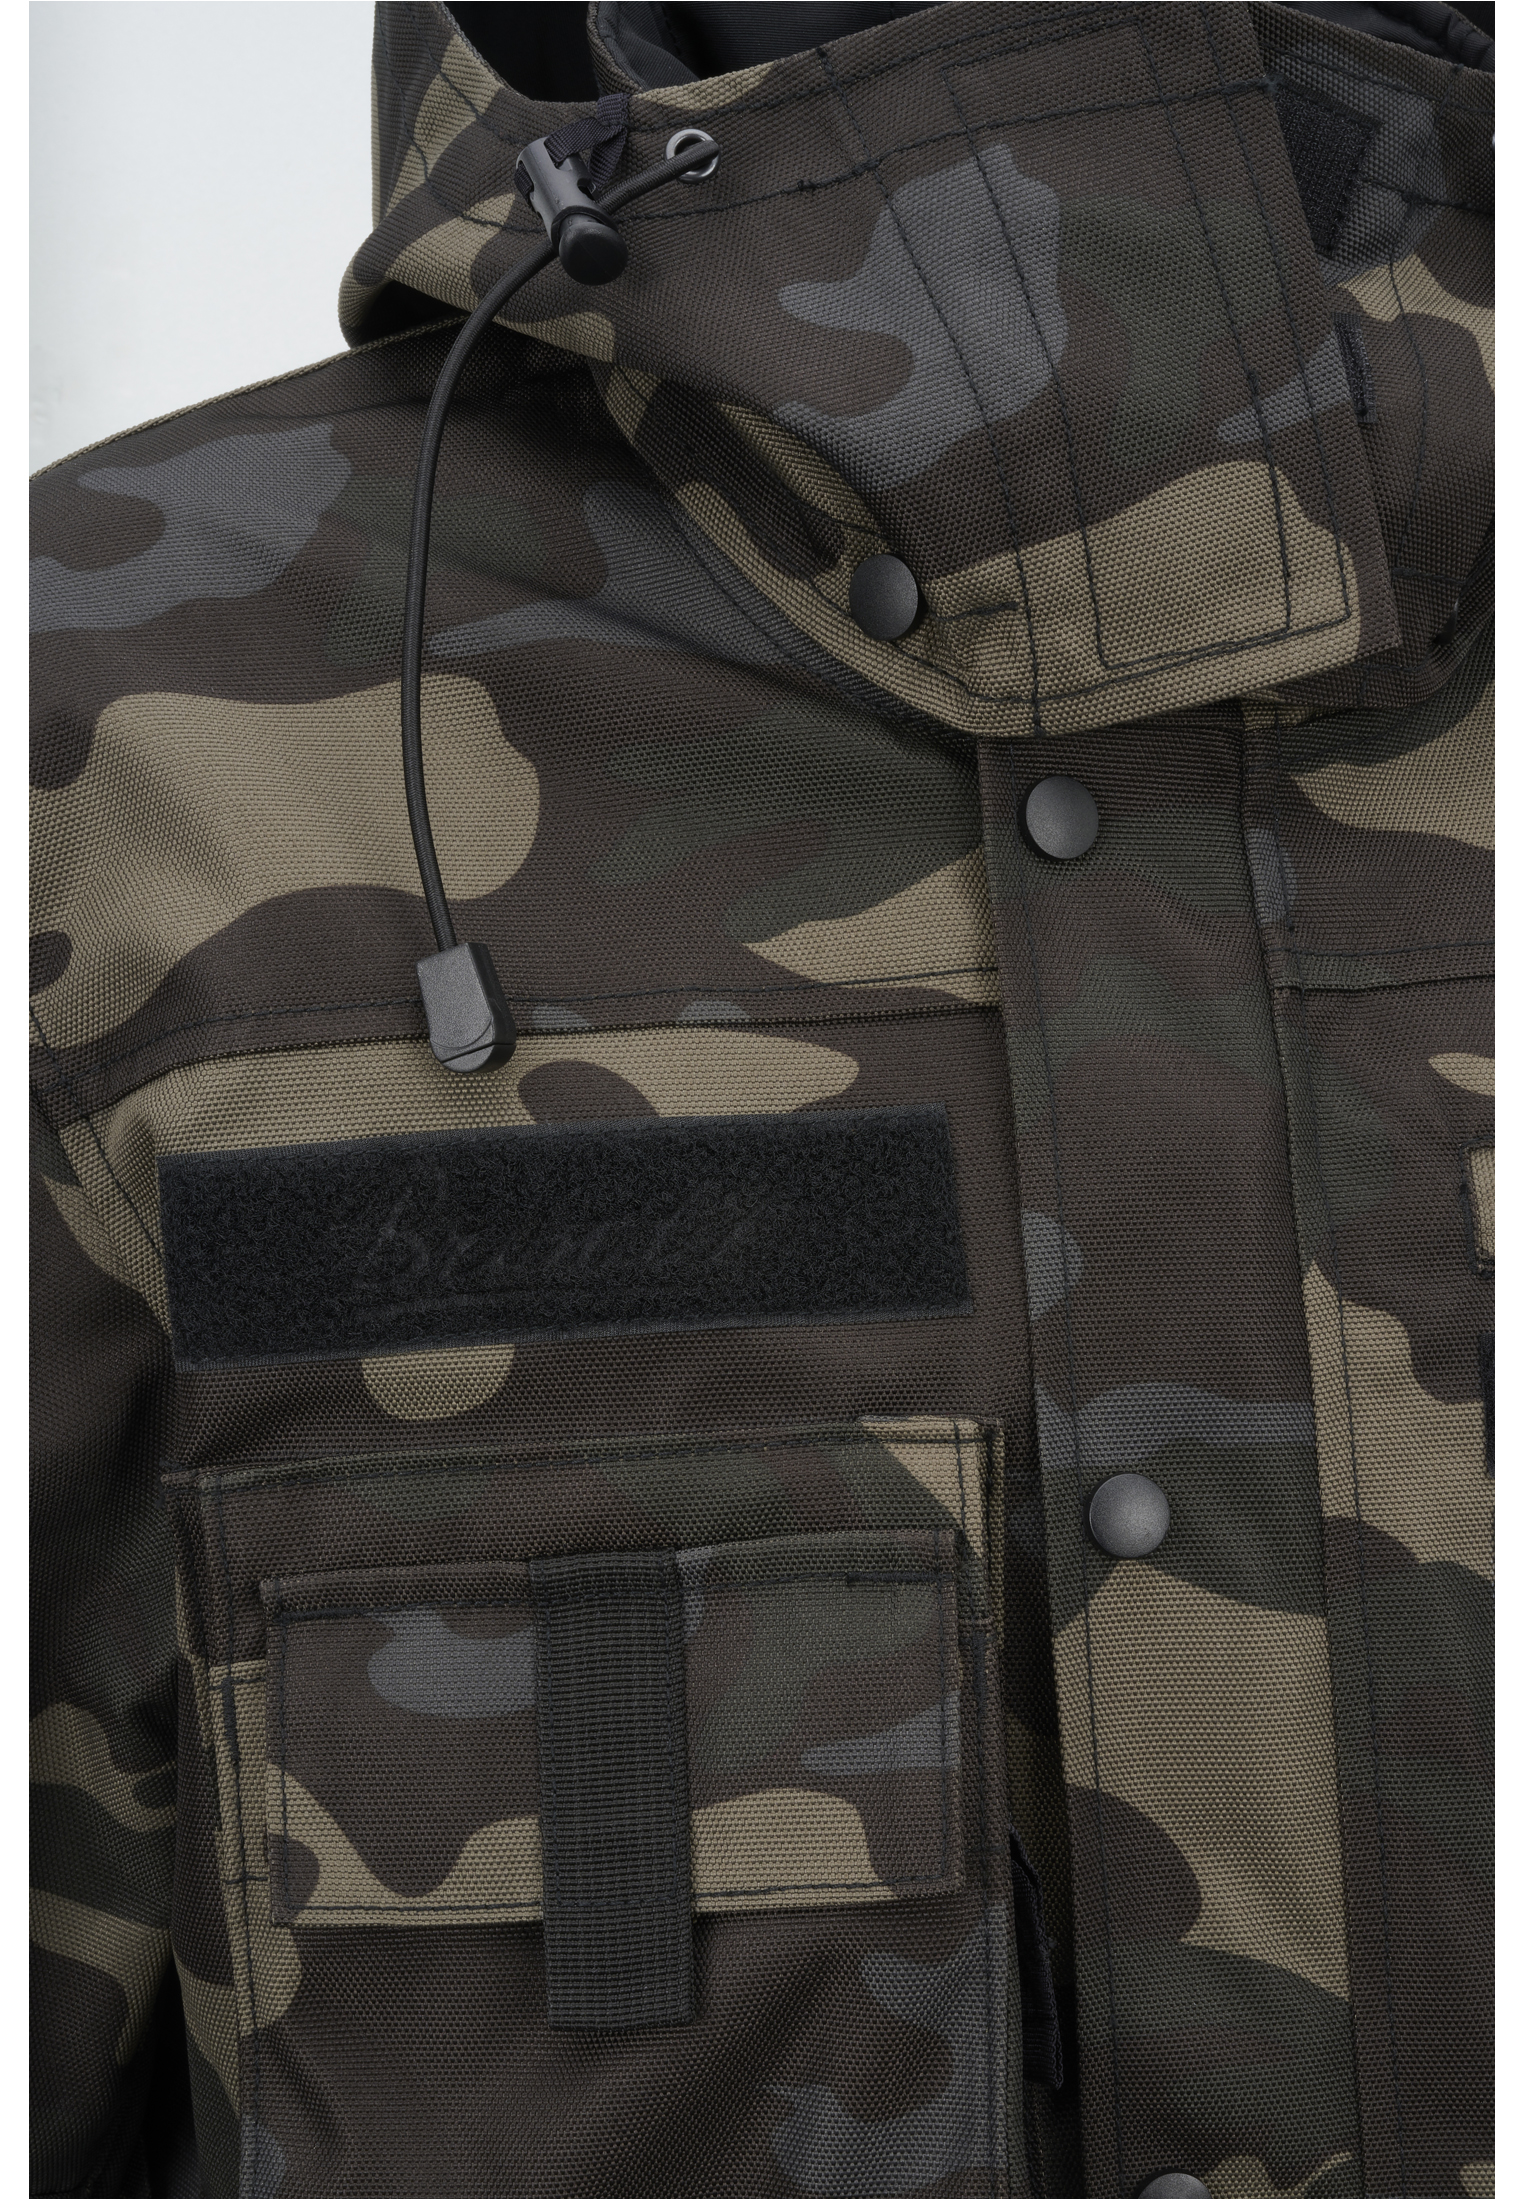 Jacken Performance Outdoorjacket in Farbe darkcamo